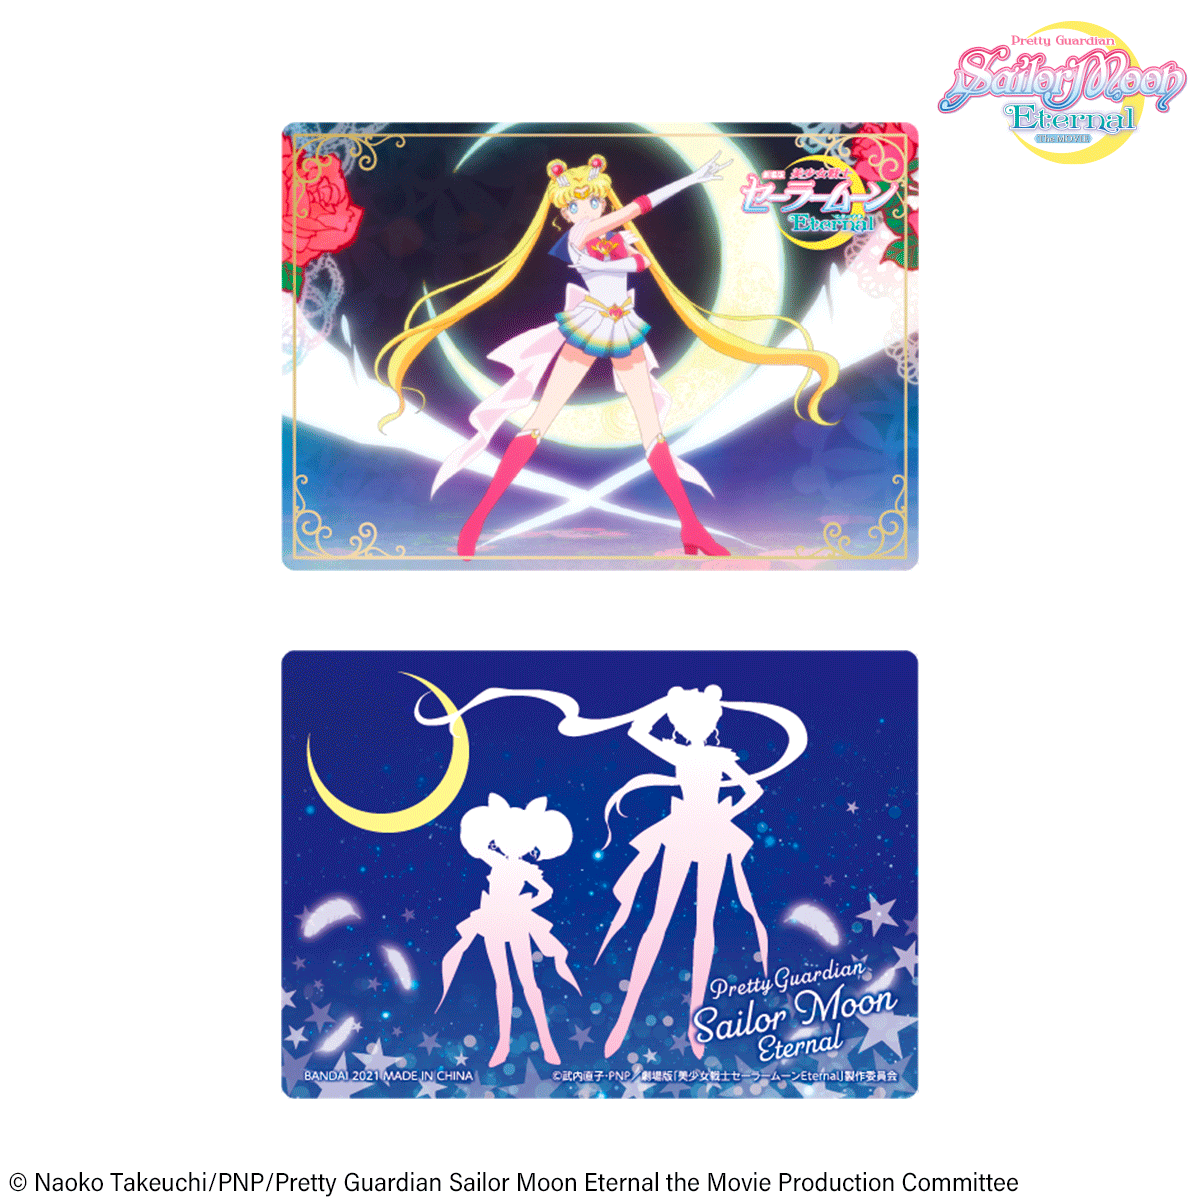  "Pretty Guardian Sailor Moon Eternal The Movie"  StyleDoll Super Sailor Moon 